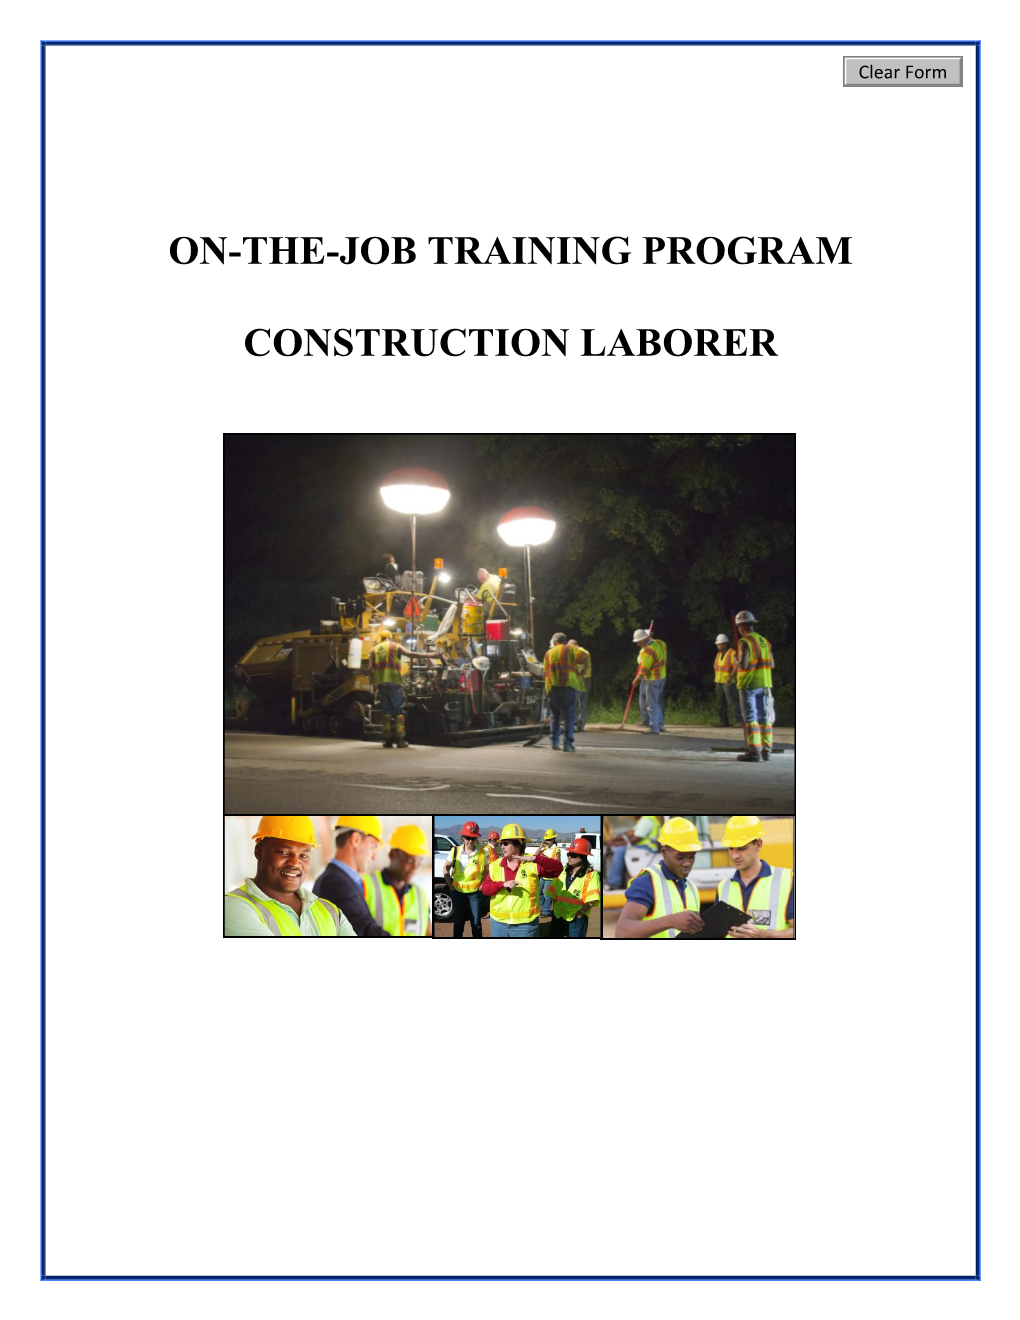 OJT Construction Laborer Trainee Template 06/10/2020